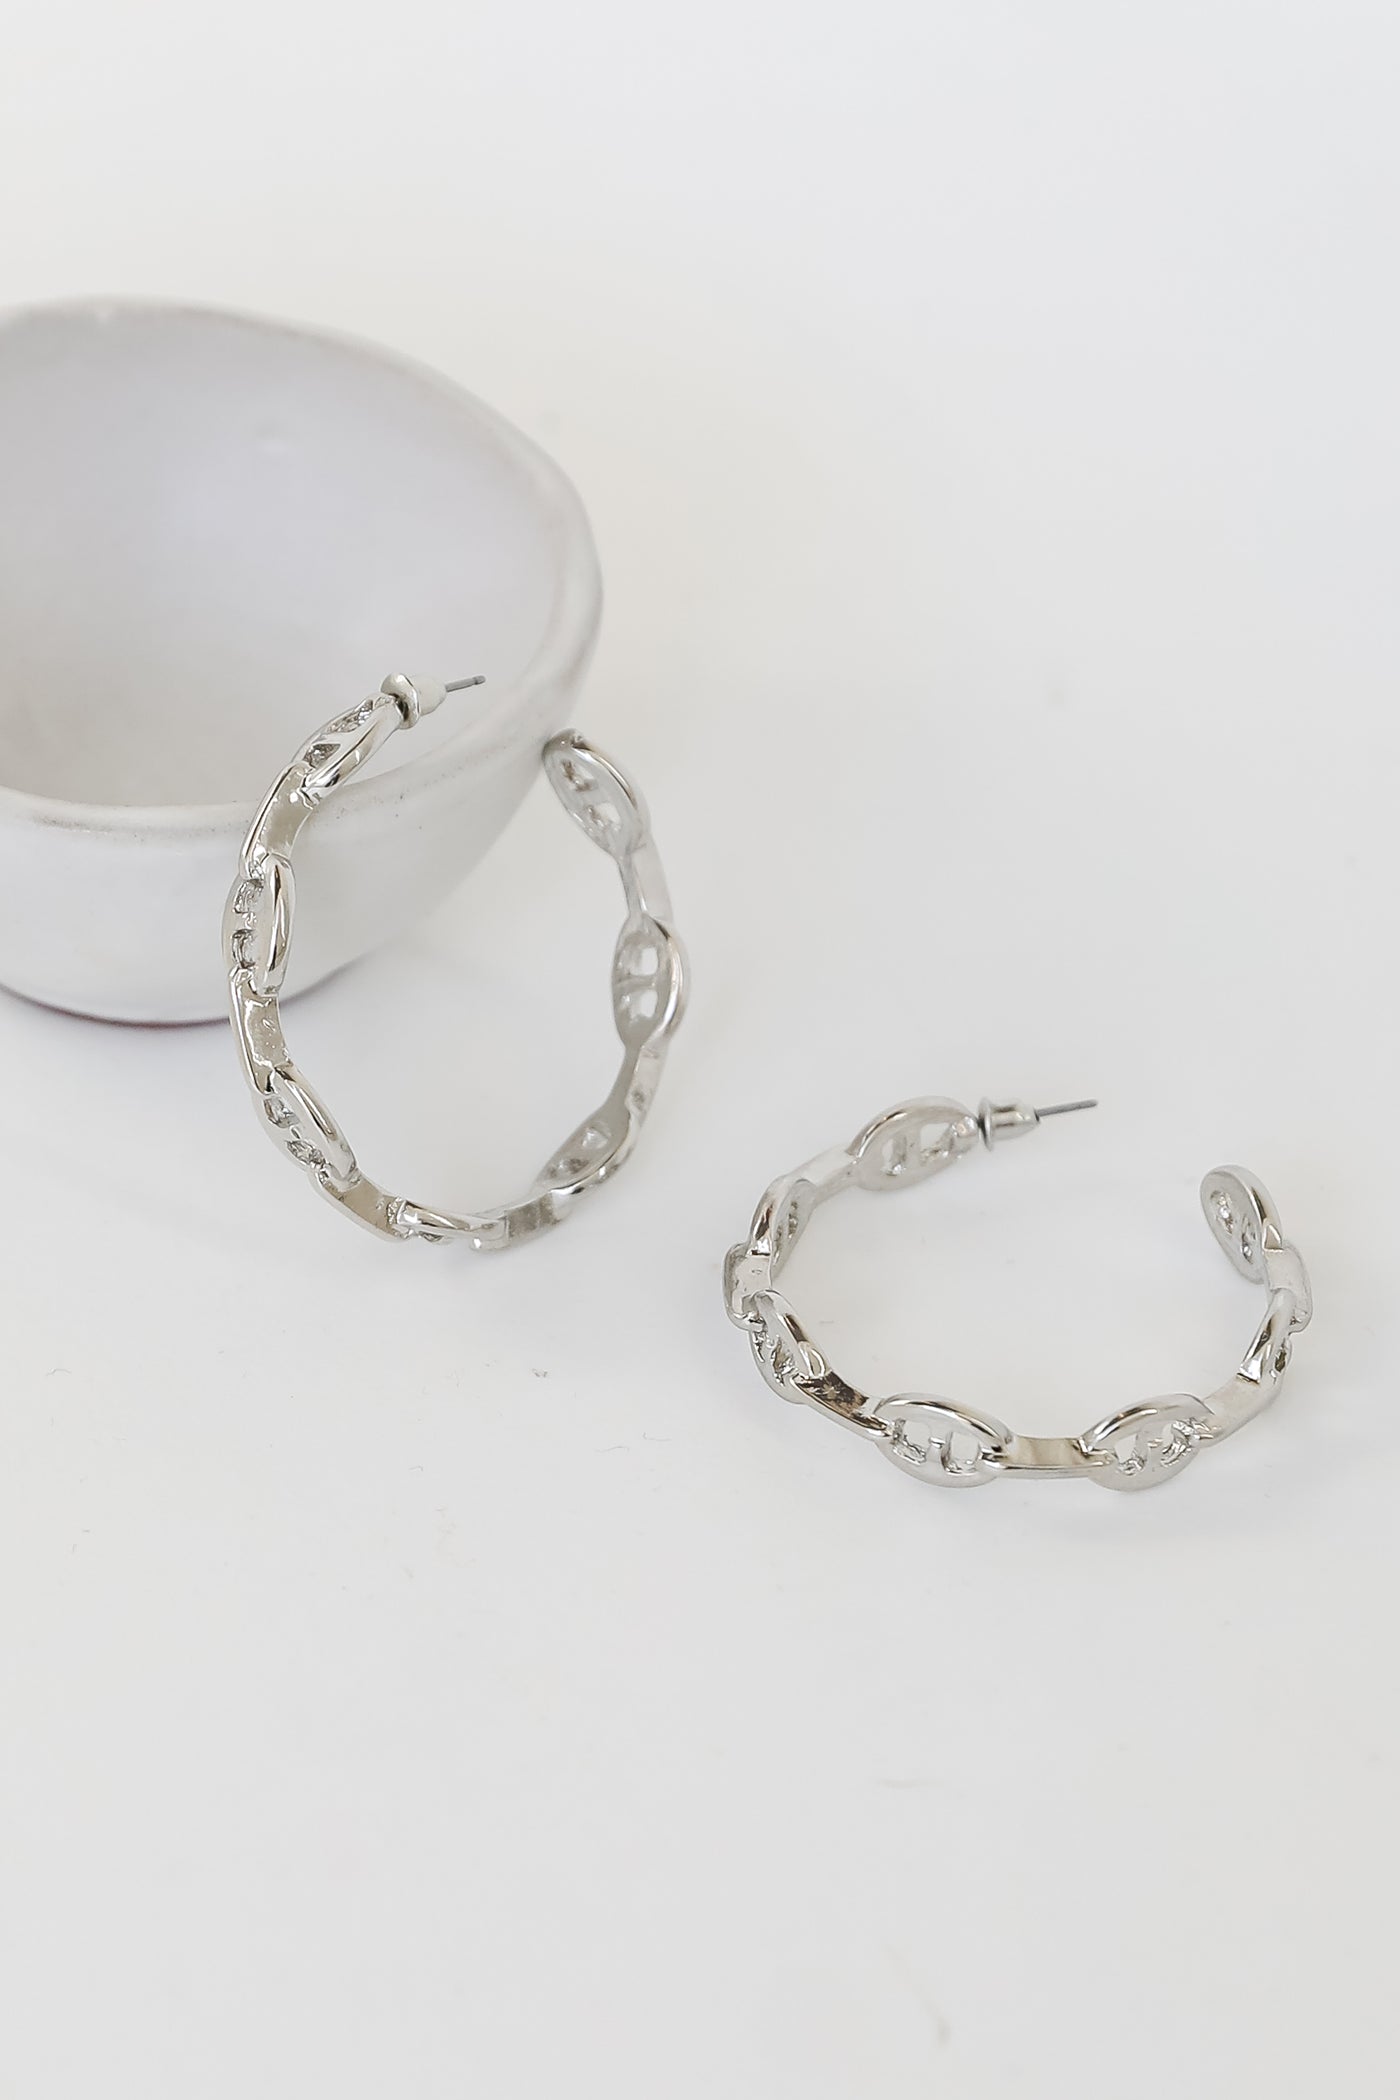 Silver Chain Hoop Earrings close up